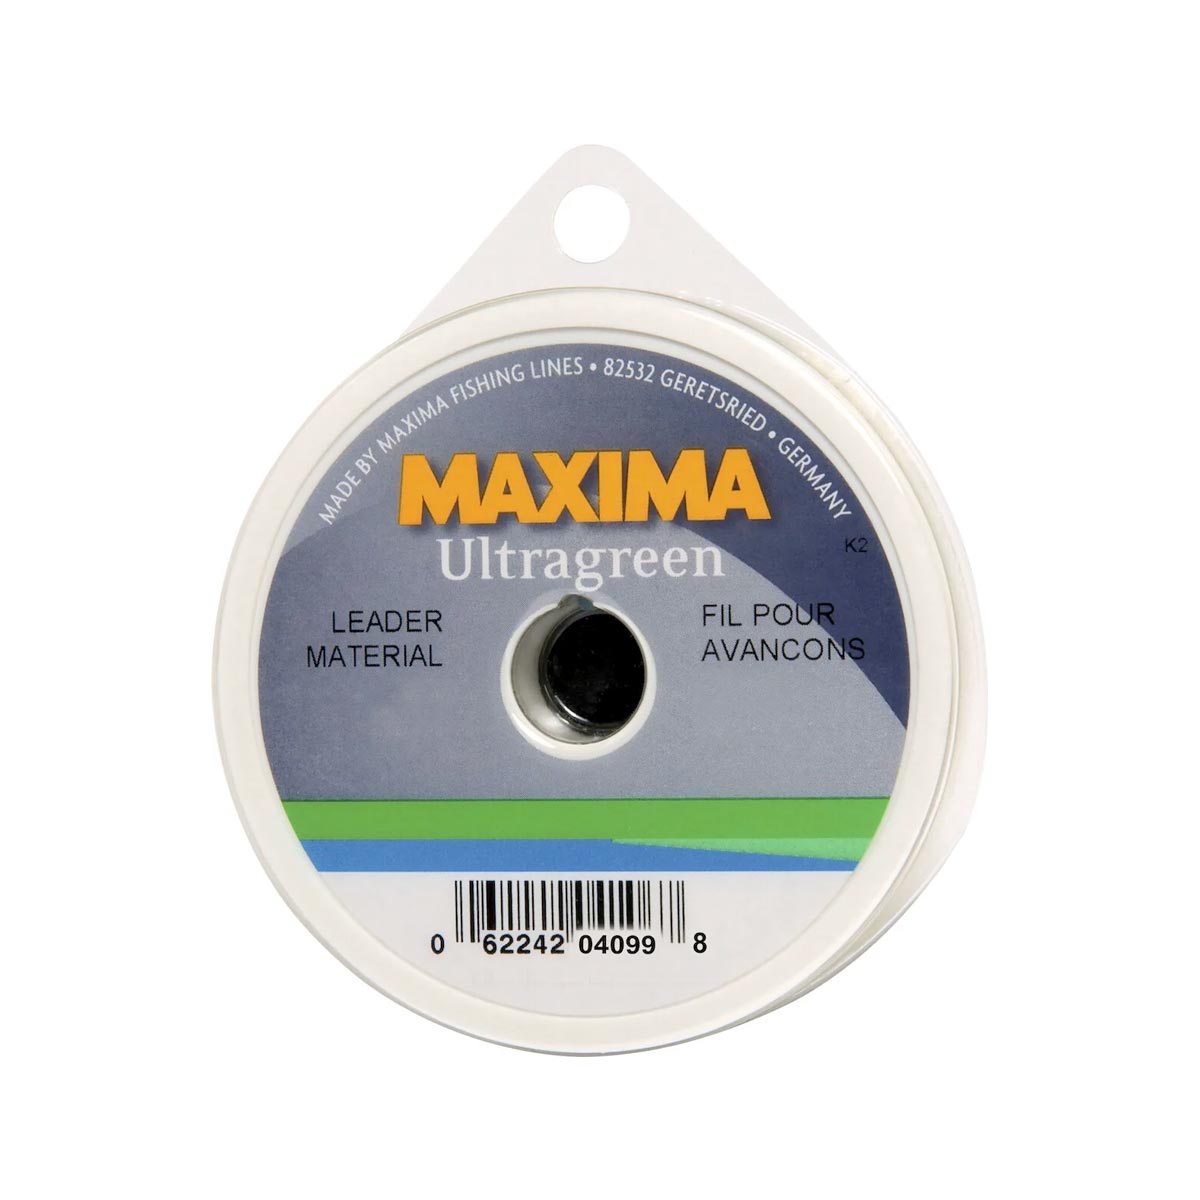 (2) Maxima Ultragreen Monofilament Fishing Line 6 Lbs Test 110 Yards ~ NEW